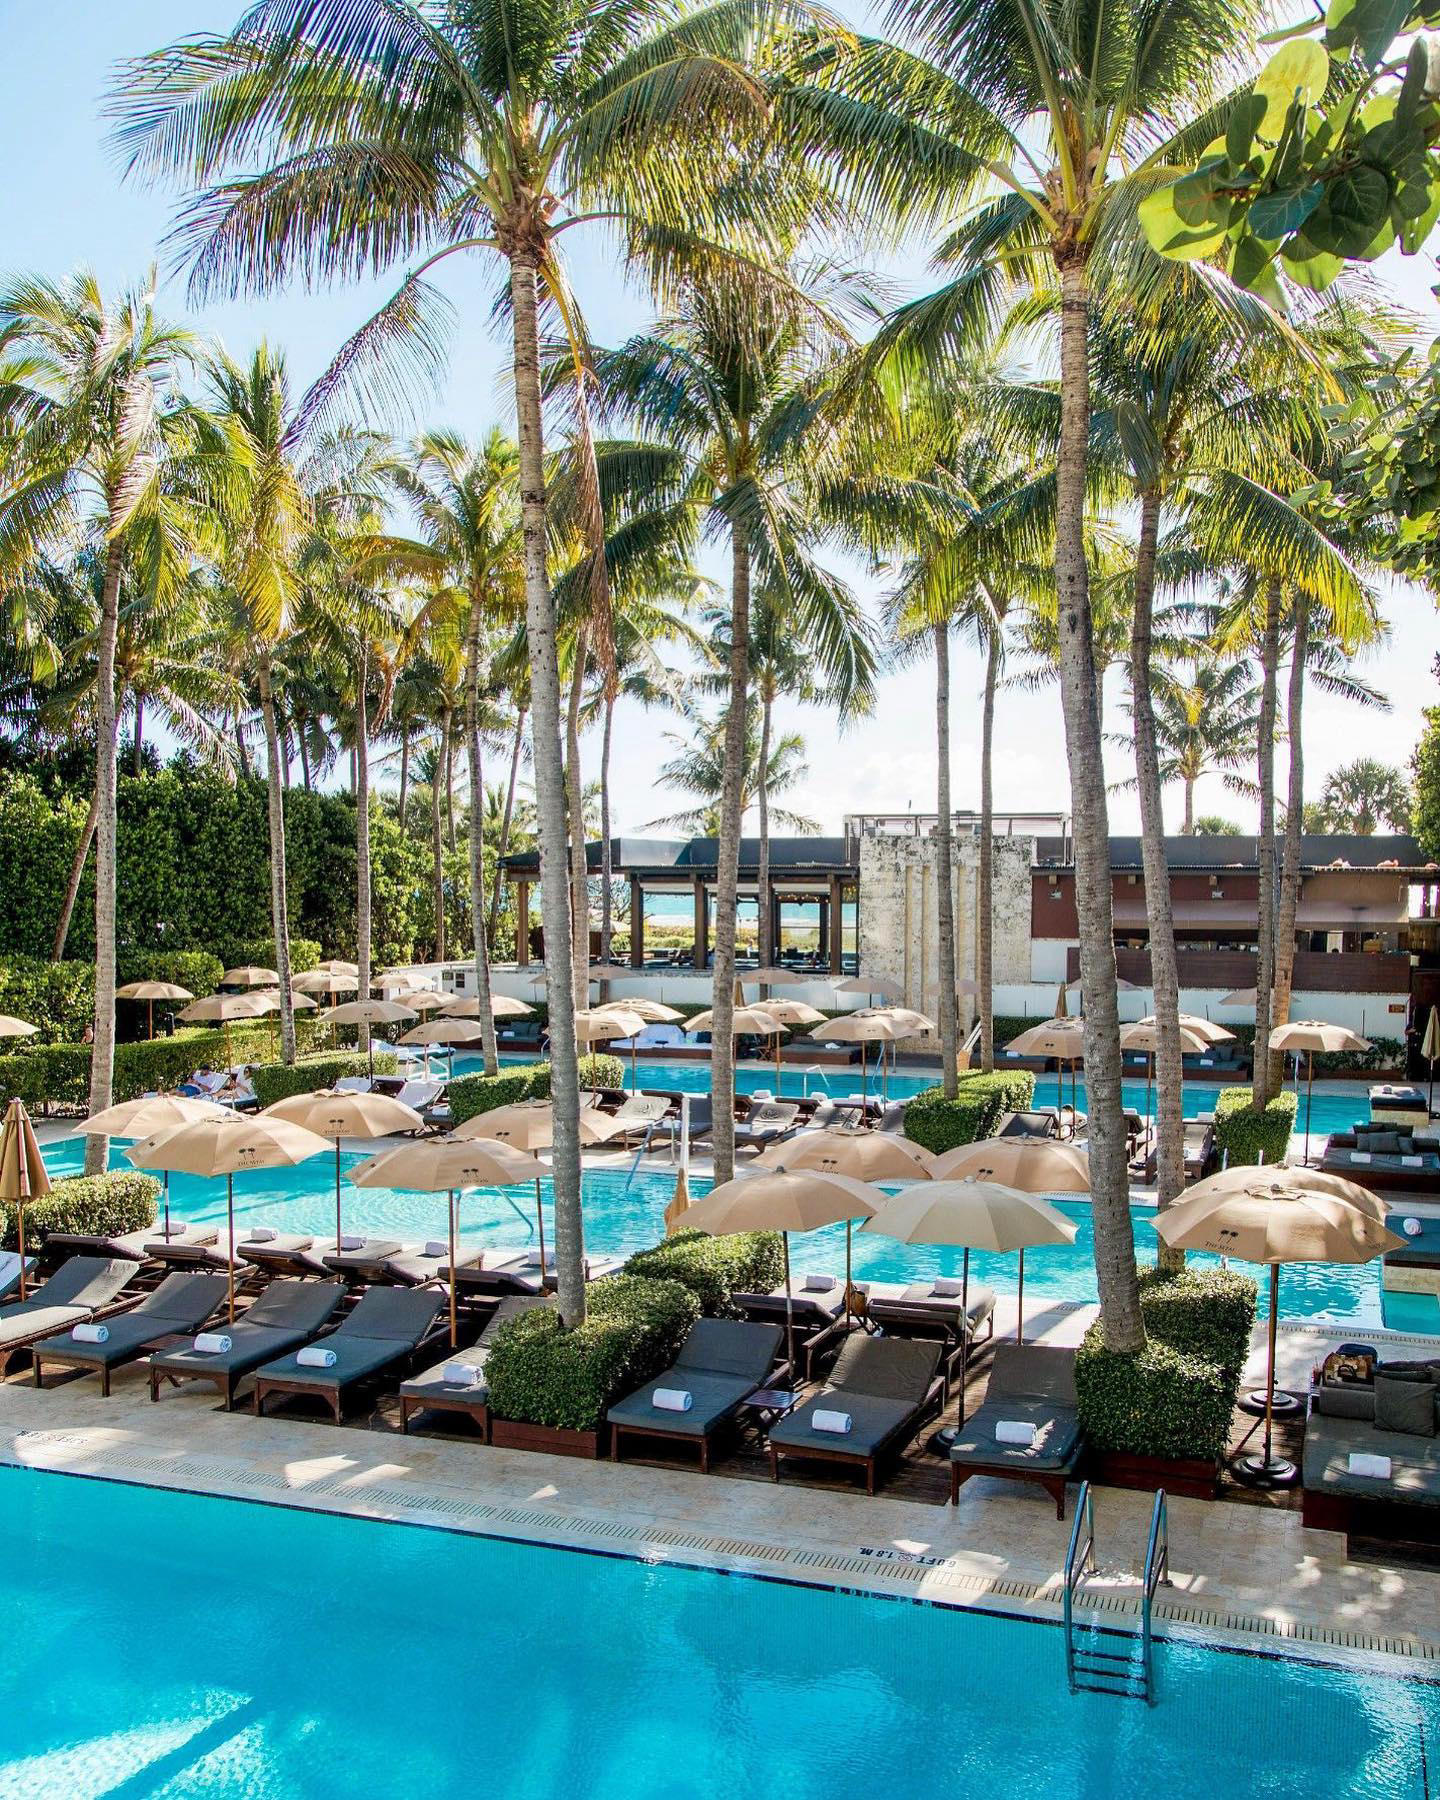 image  1 The Setai, Miami Beach - Your ideal poolside escape